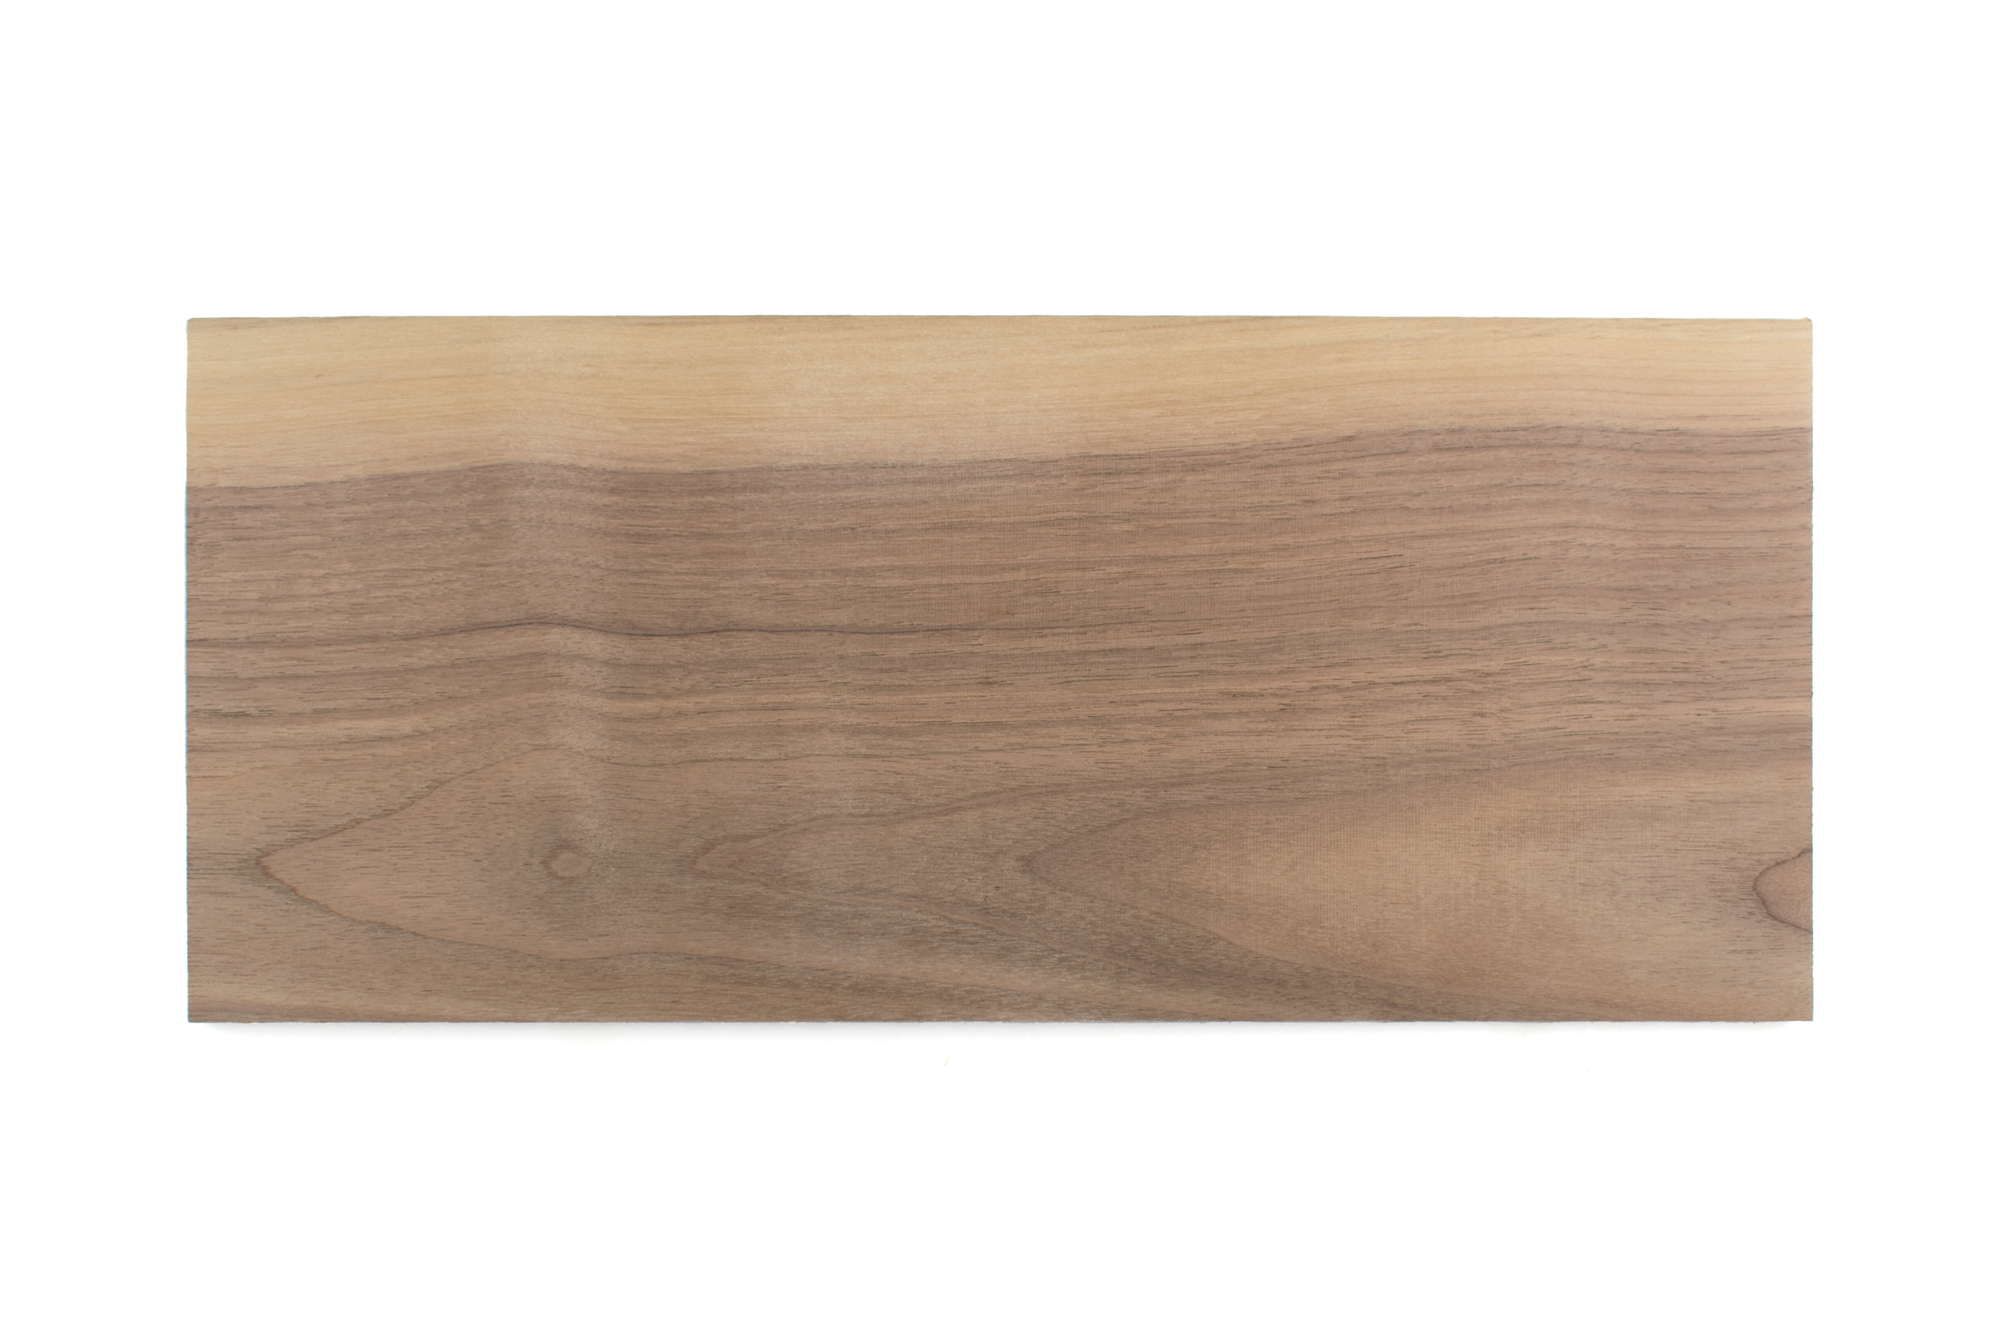 Walnut Wood craft board 1/4 inch thick